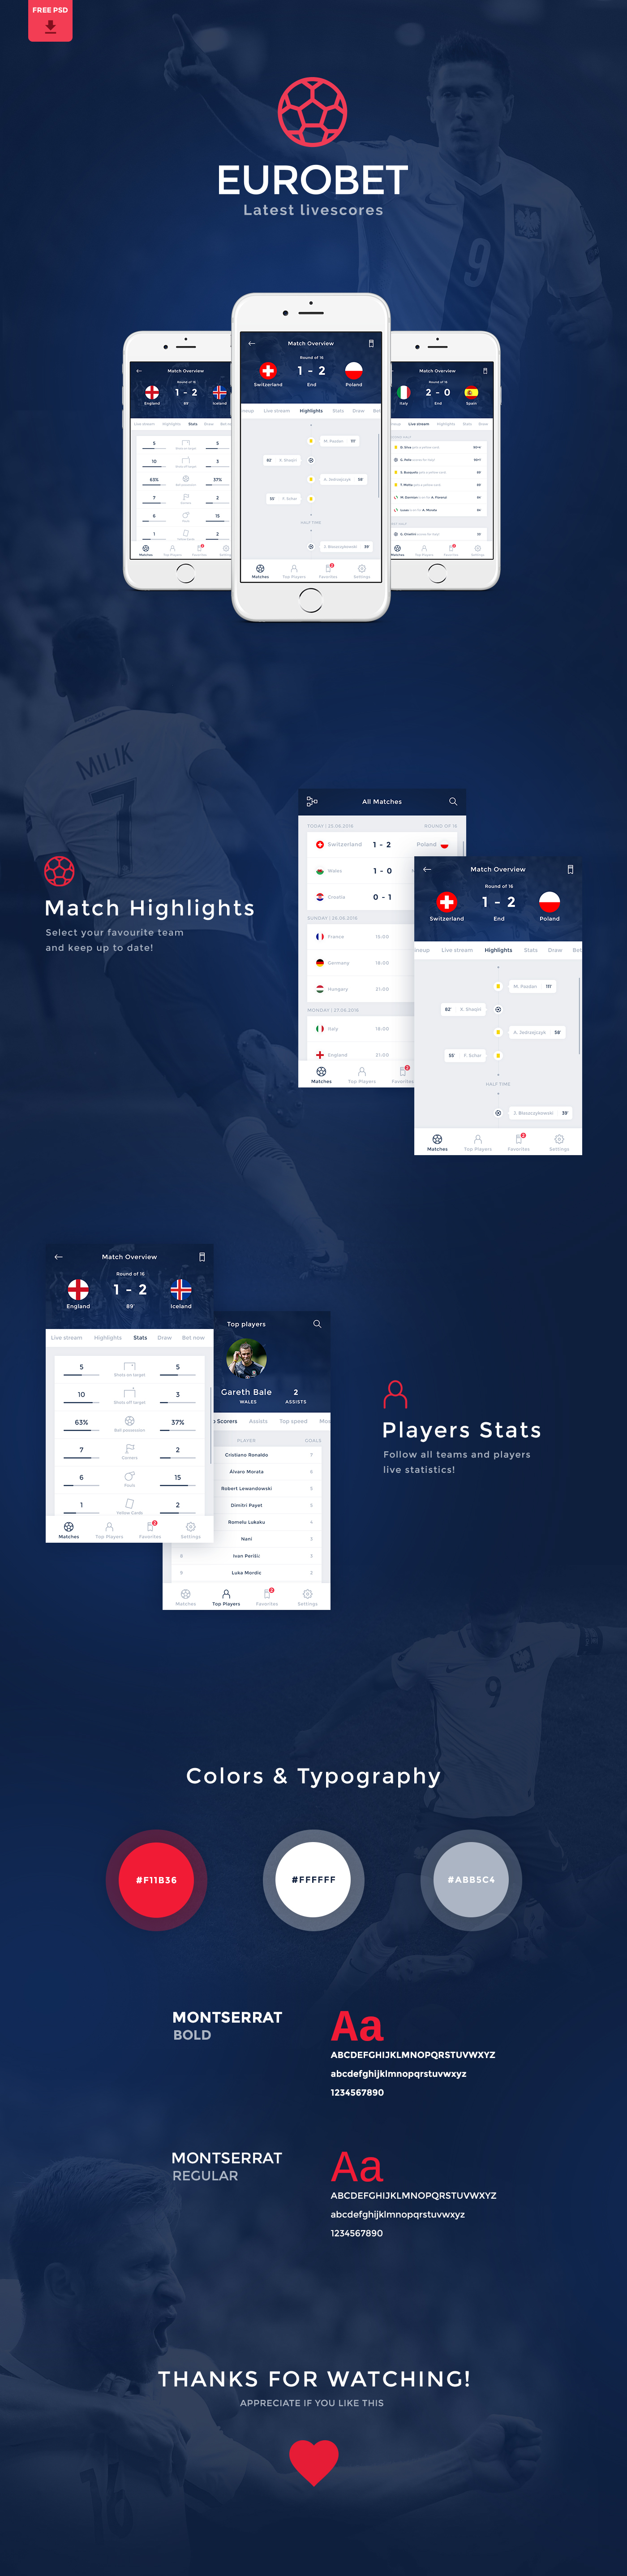 poland lewandowski euro app bet mobile free freebies download iphone football soccer